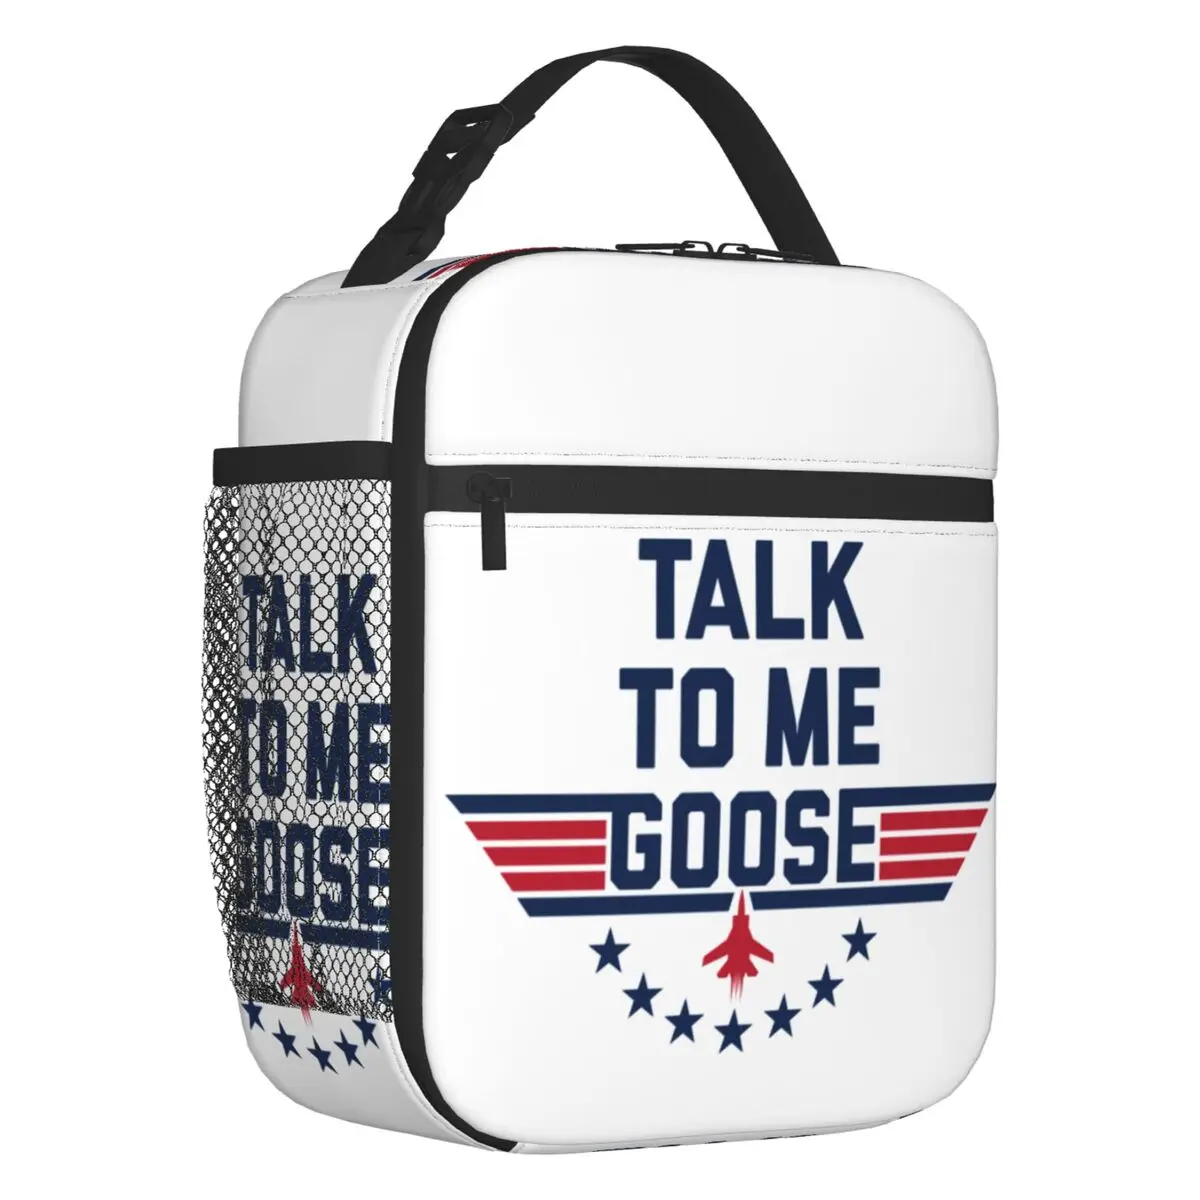 

TALK TO ME GOOSE Insulated Lunch Bag for Women Resuable Top Gun Maverick Film Cooler Thermal Bento Box Kids School Children